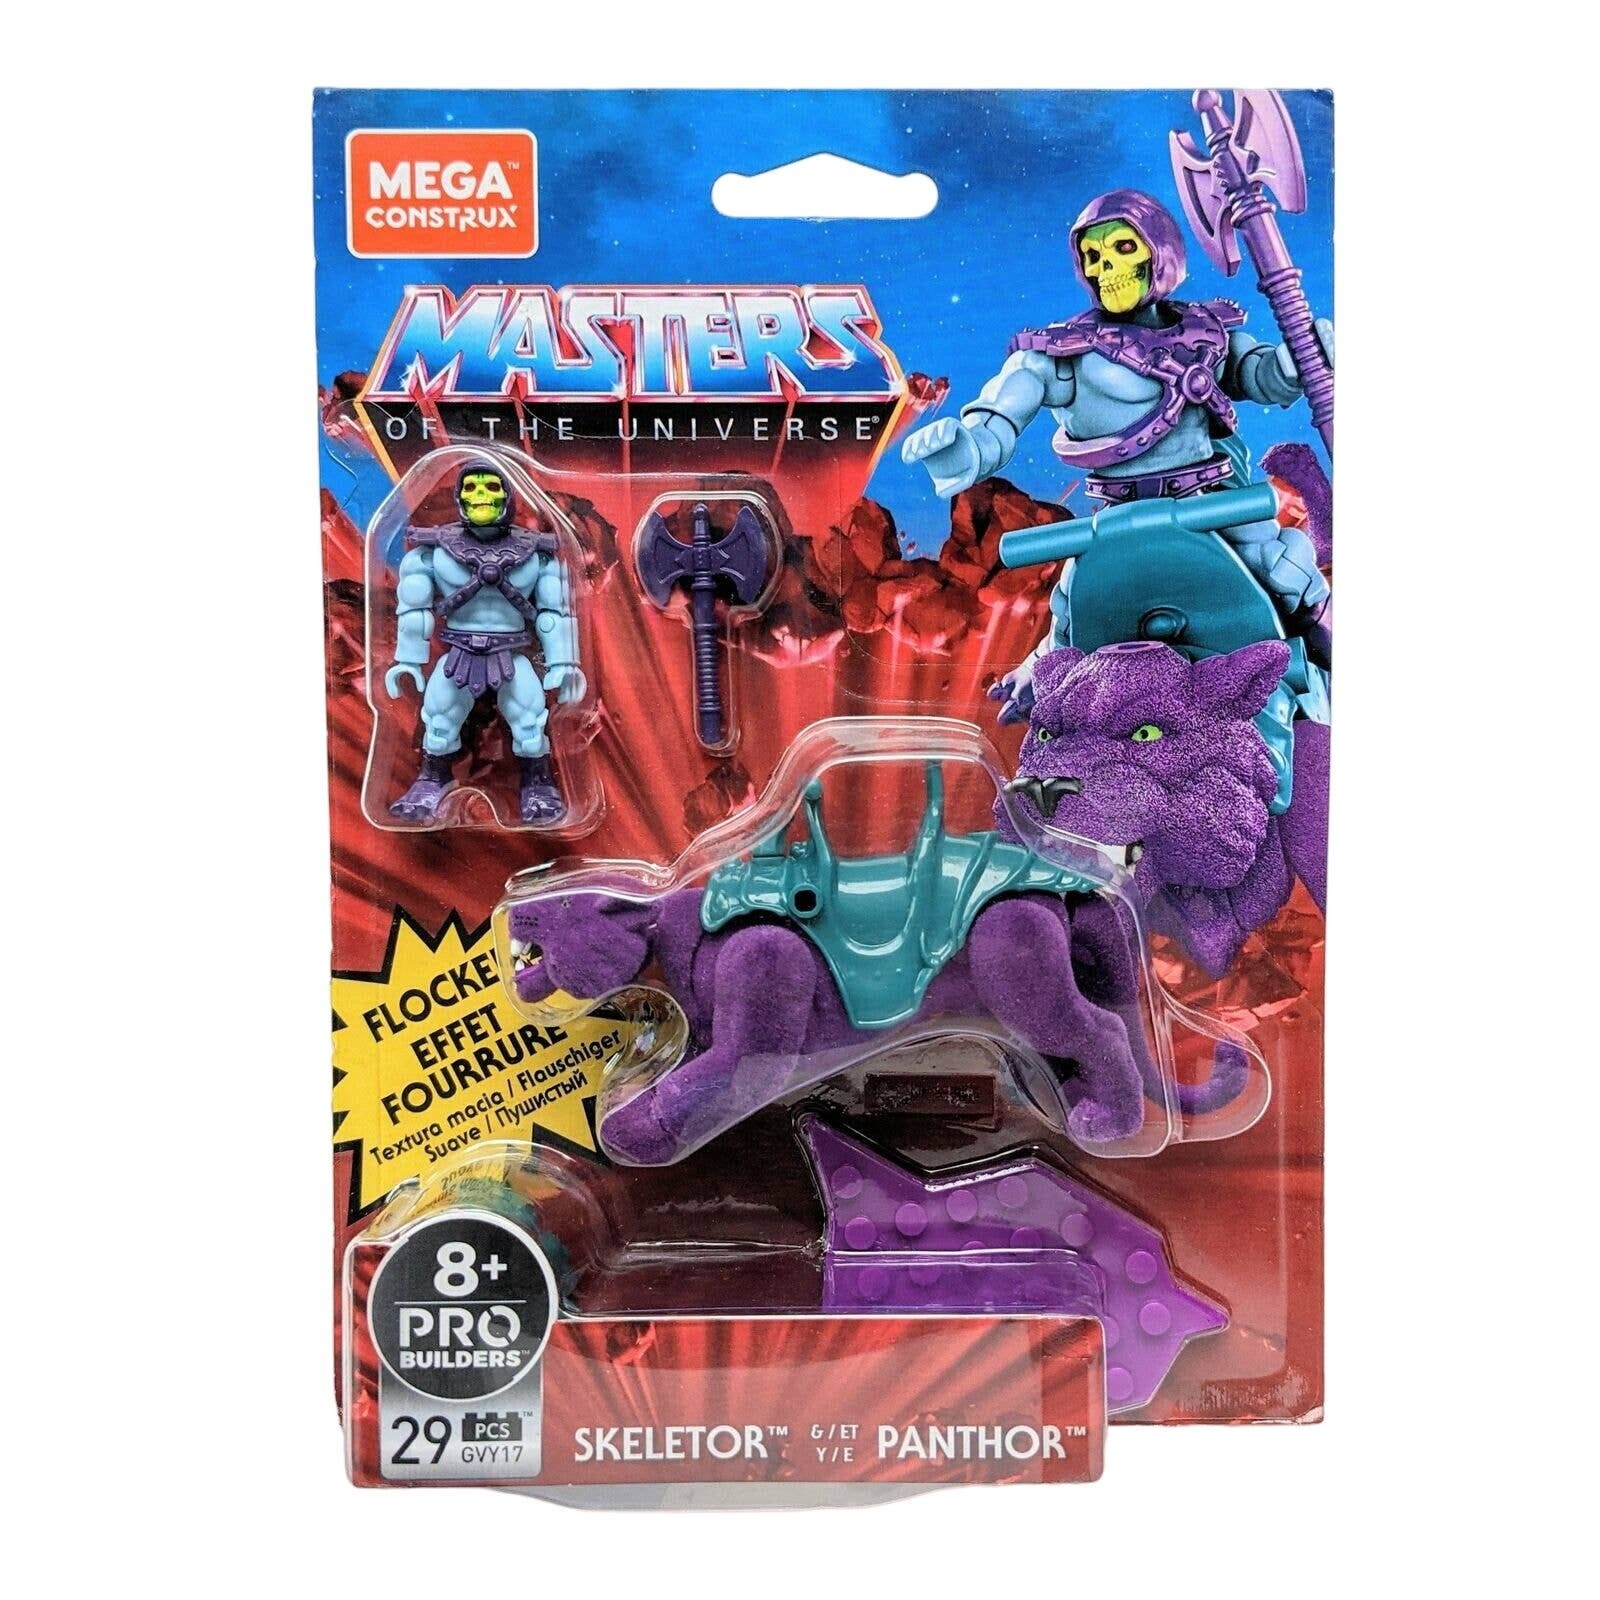 Mega Construx Masters of the Universe Skeletor & Panthor - New (Mattel, 2020) - $12.86